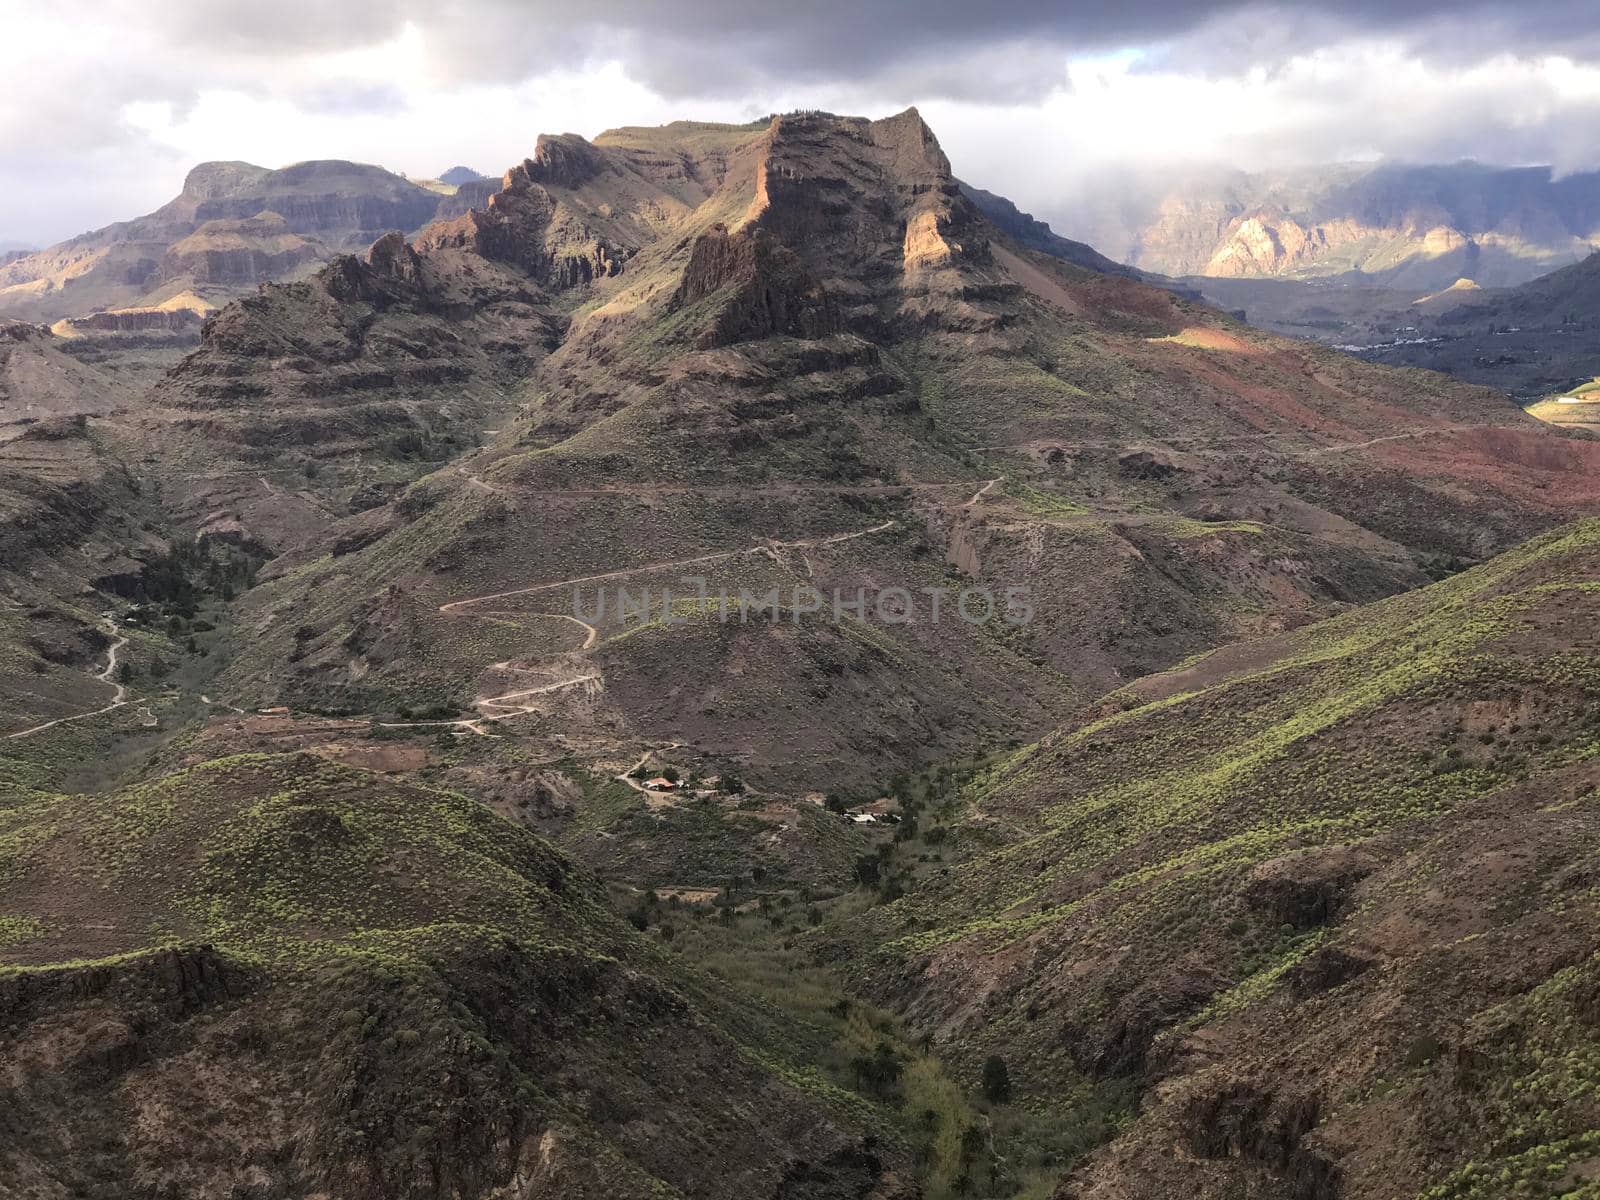 Landscape from the Degollada de las Yeguas lookout point in south Gran Canaria 